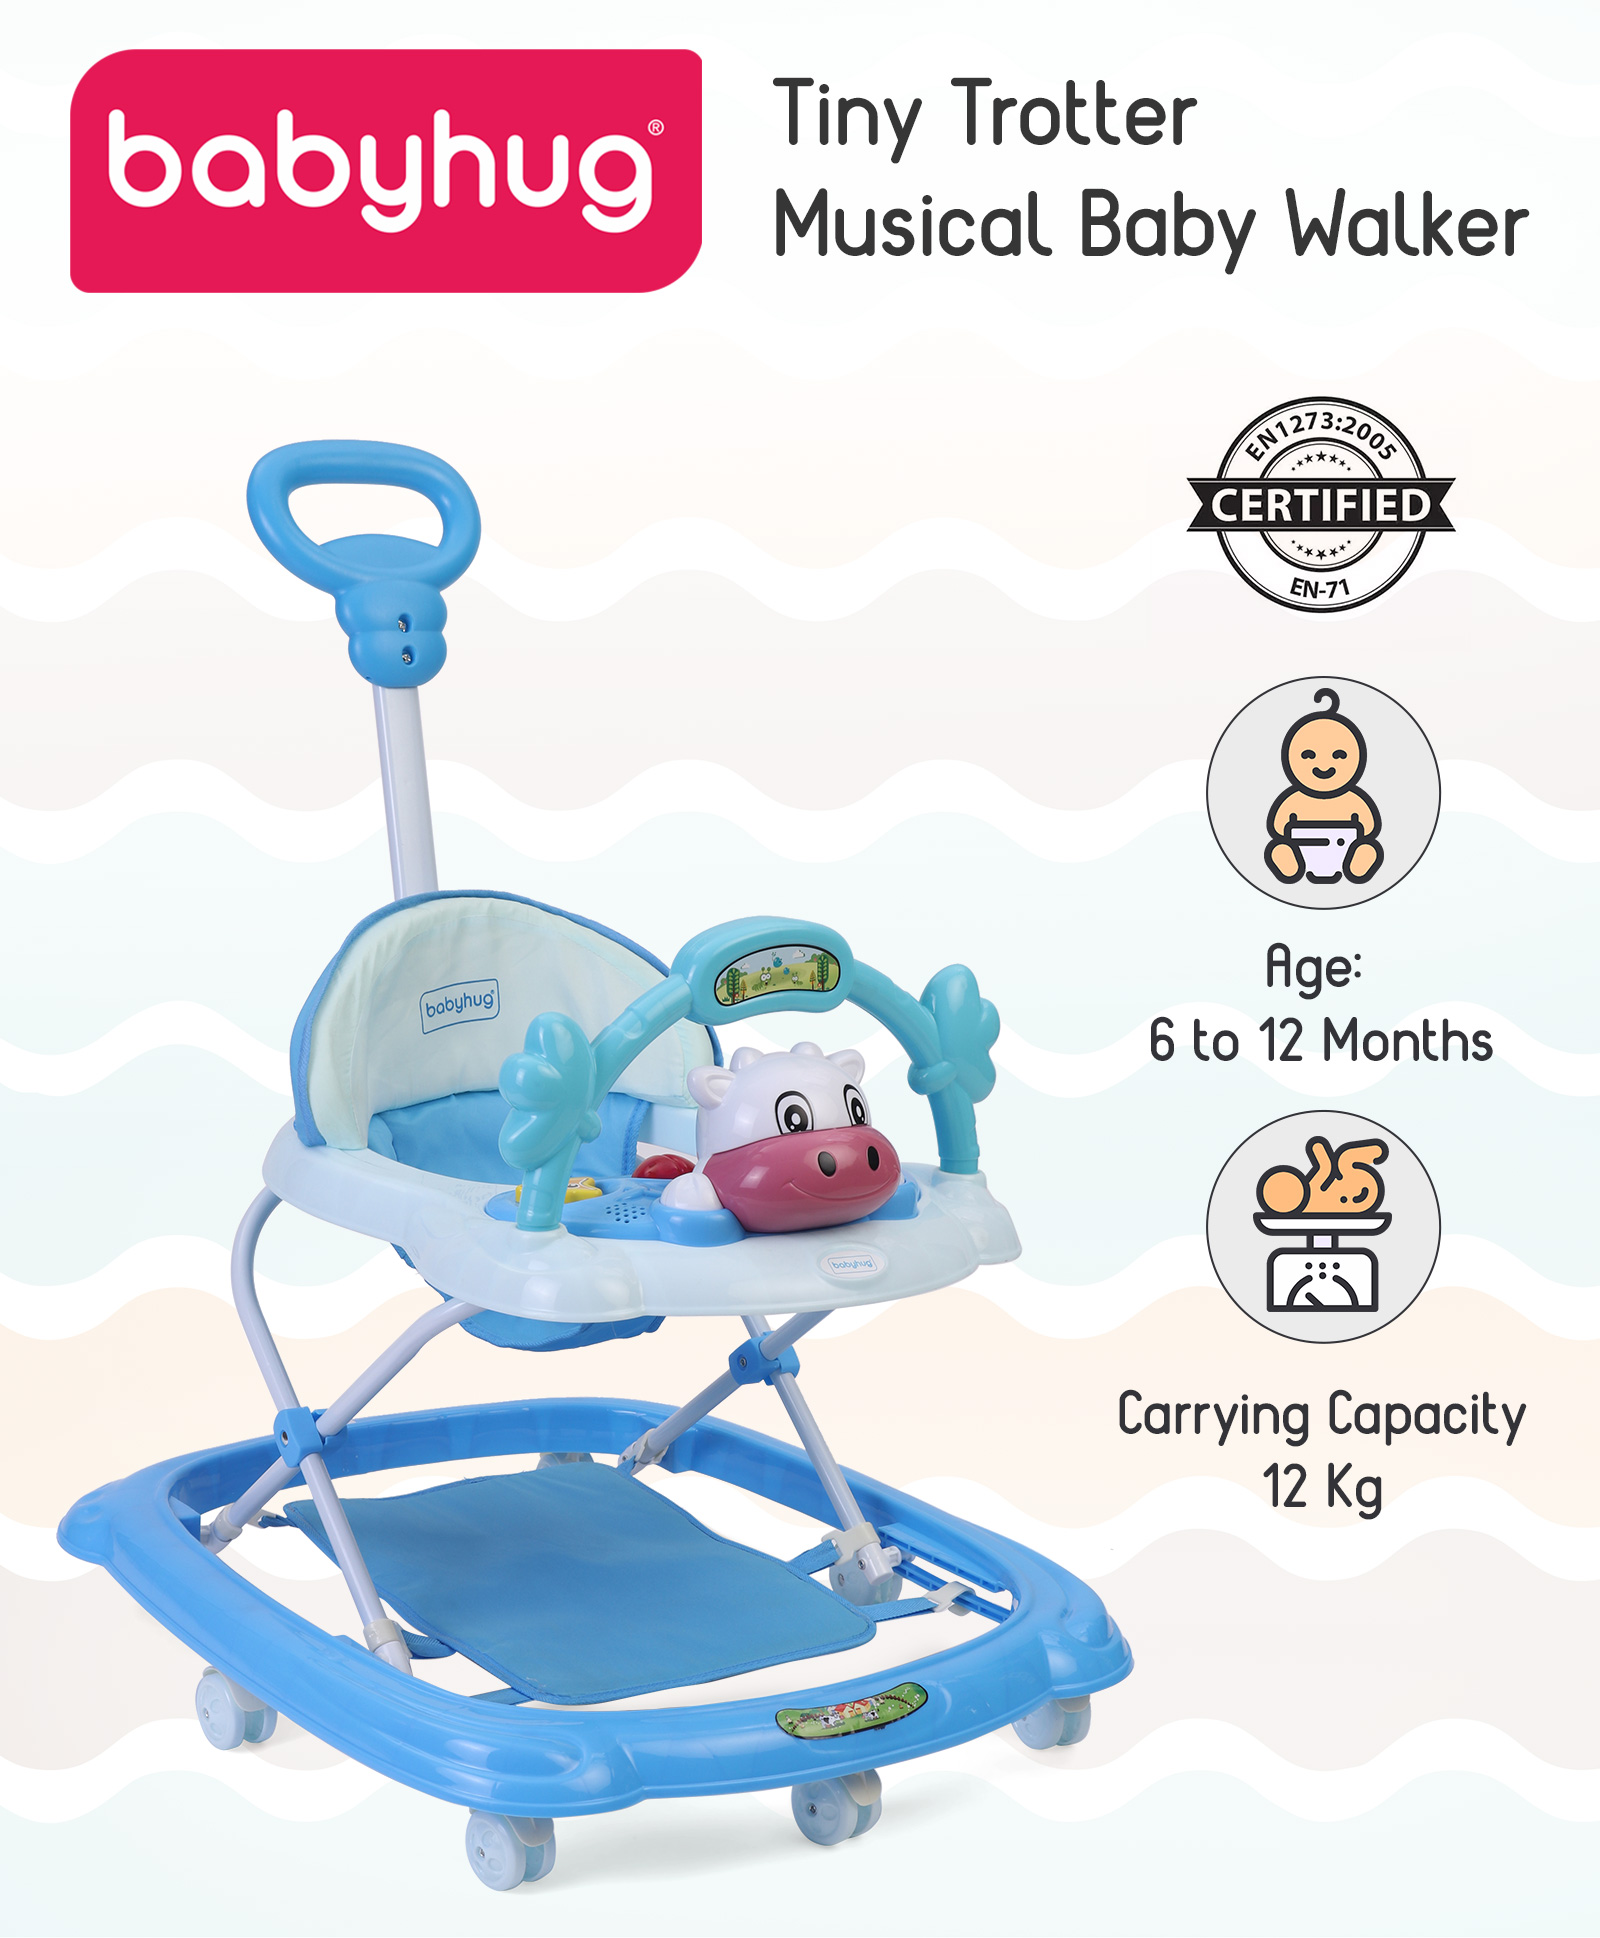 babyhug tiny trotter musical baby walker